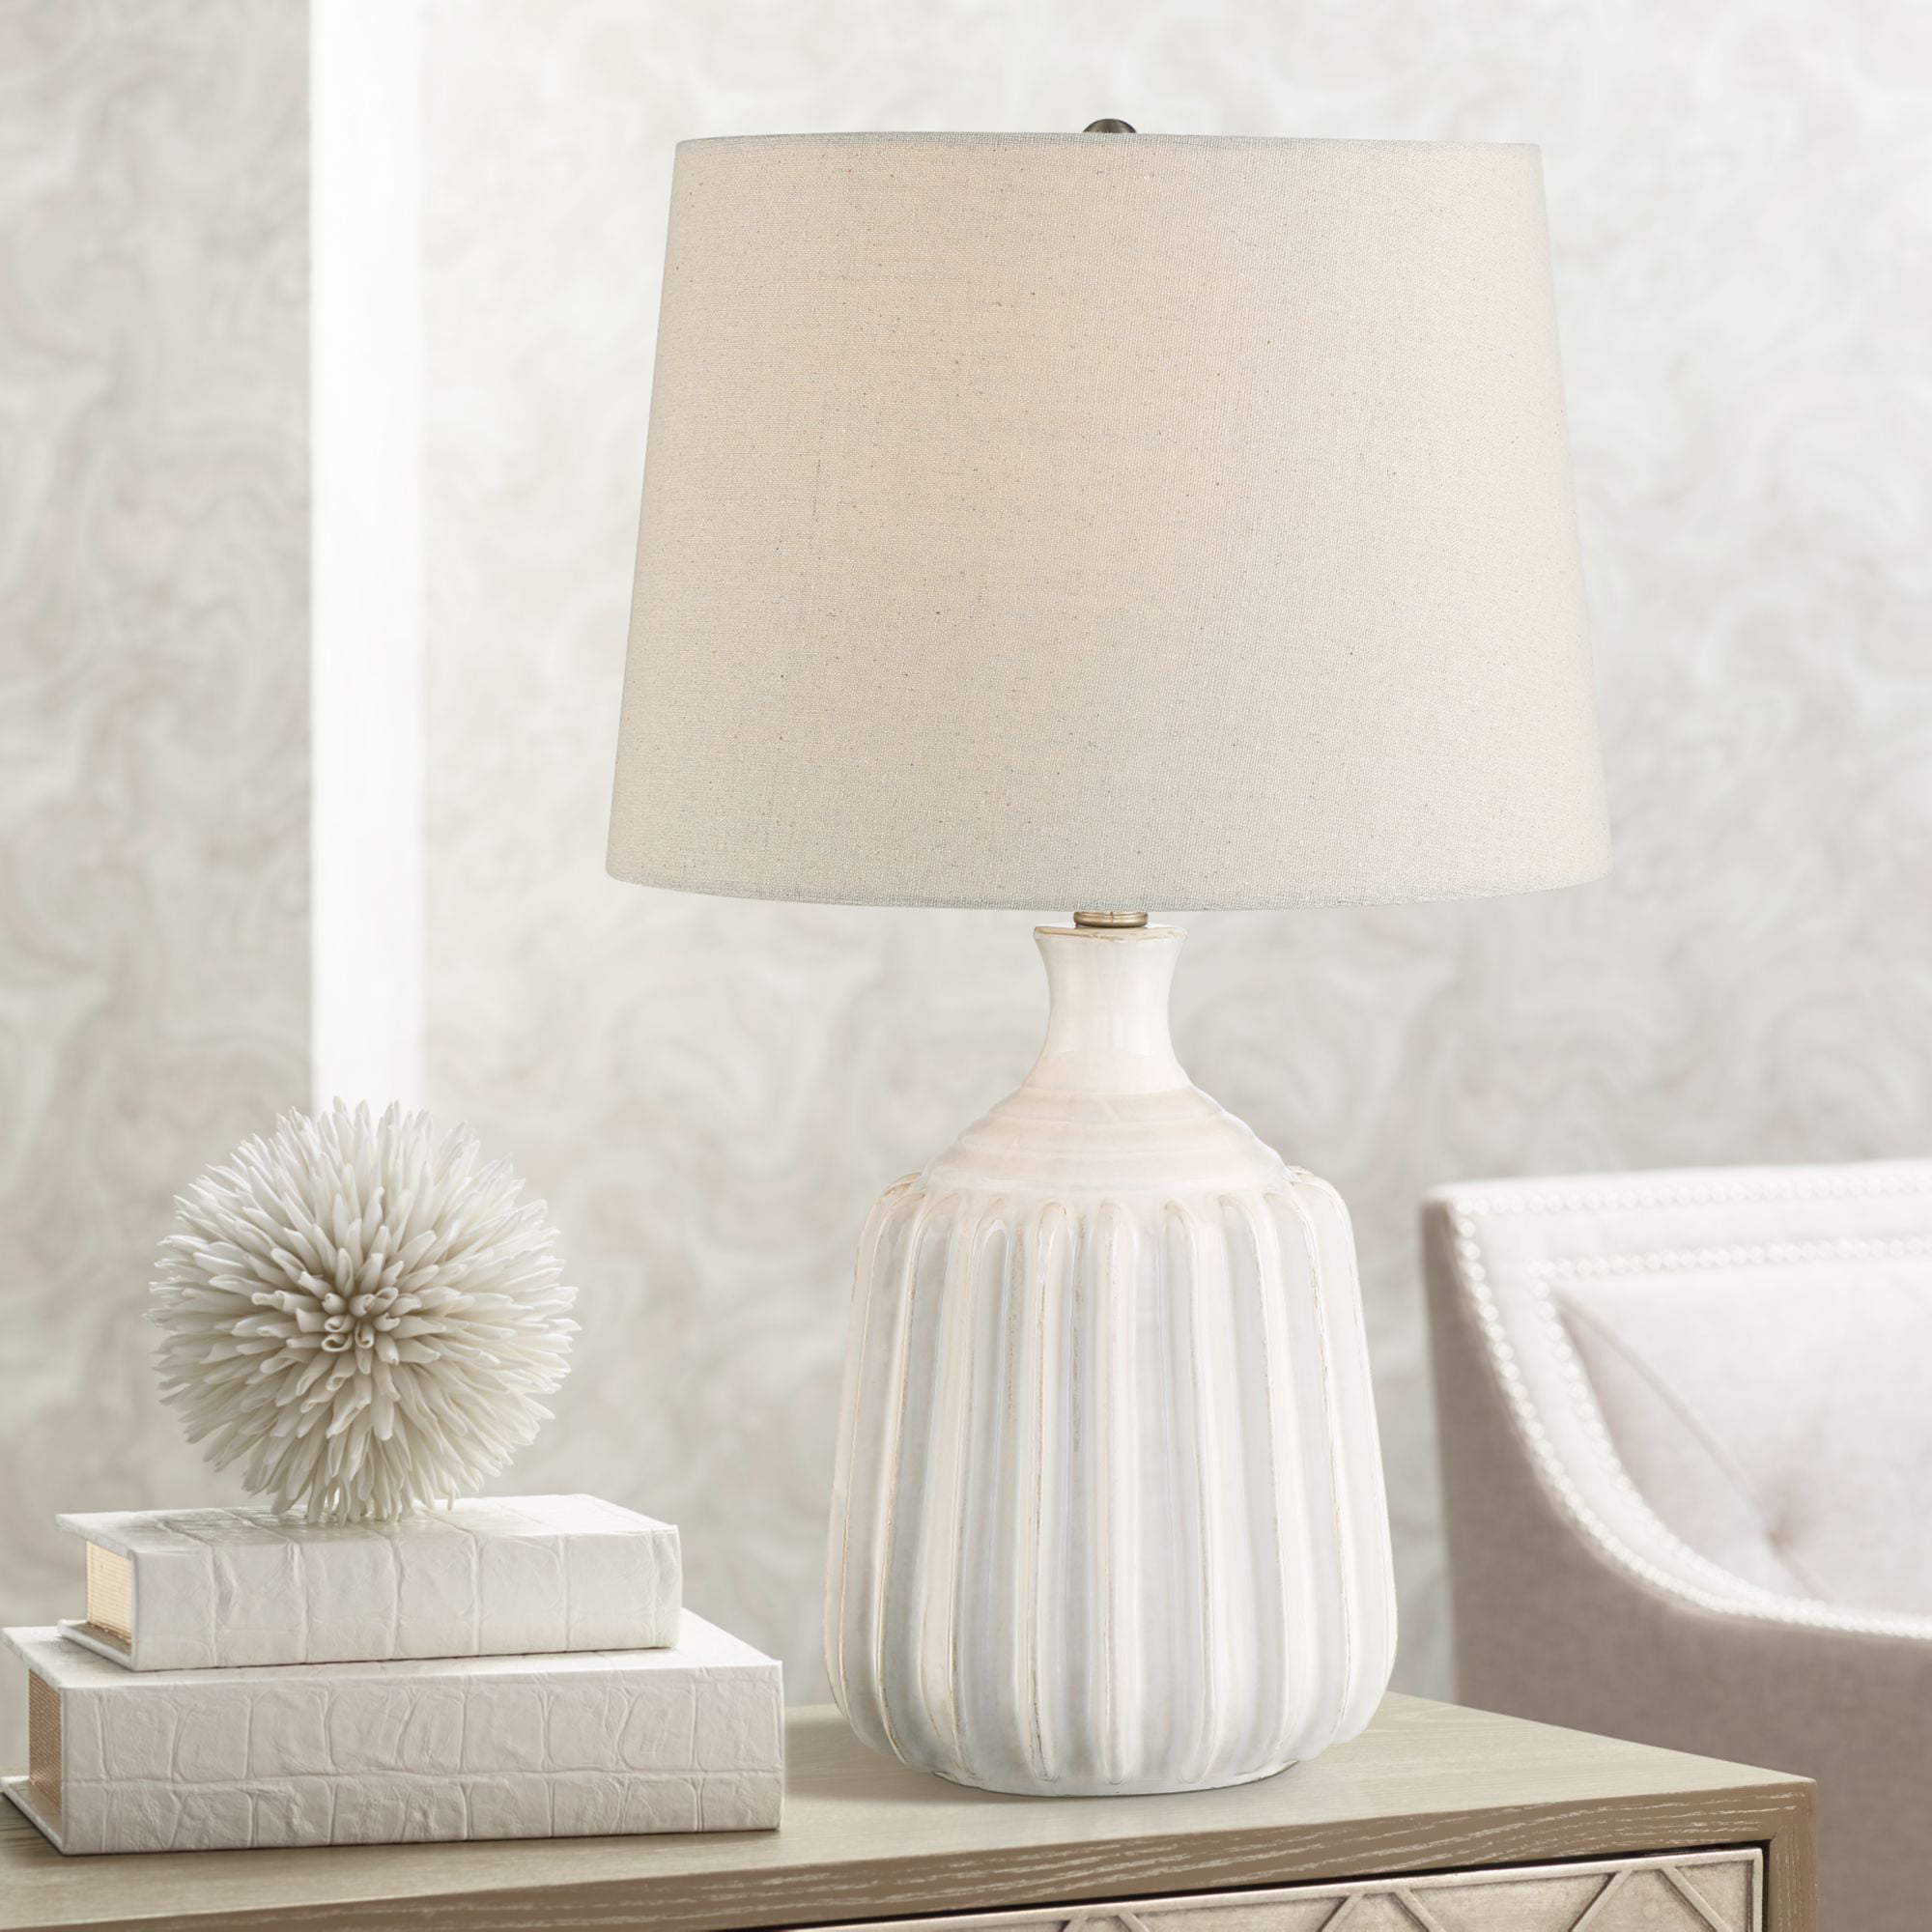 360 Lighting Mid Century Modern Accent, Mid Century Modern Bedroom Table Lamp